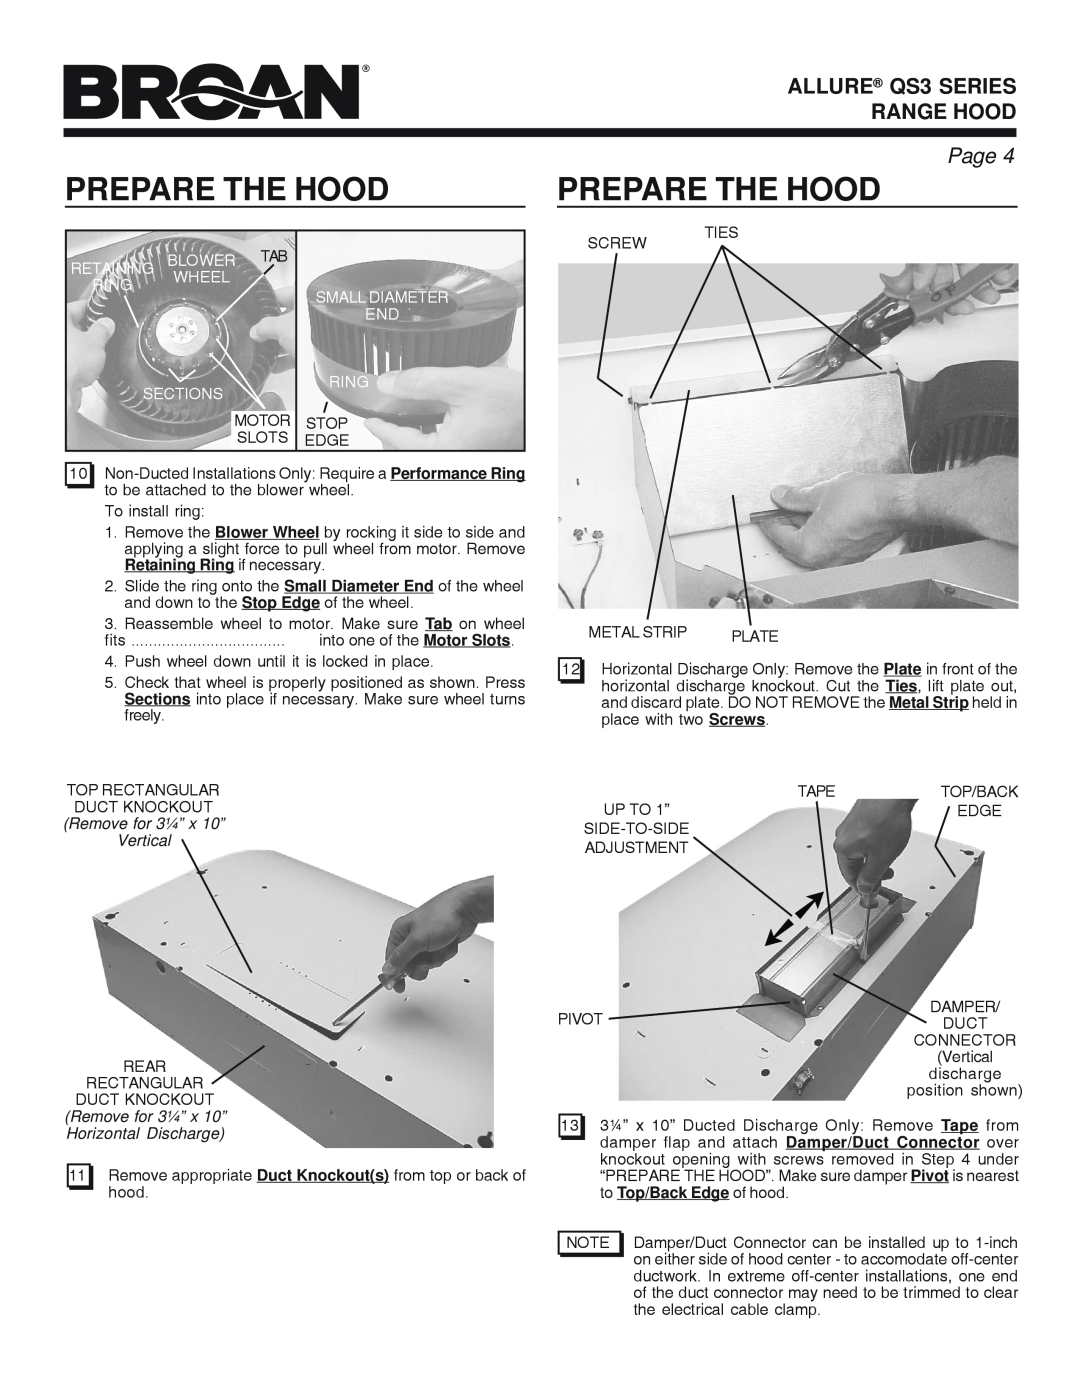 Broan Prepare The Hood, ALLURE QS3 SERIES RANGE HOOD, Page, Retaining Blower Tab Ring Wheel Small Diameter, Sections 